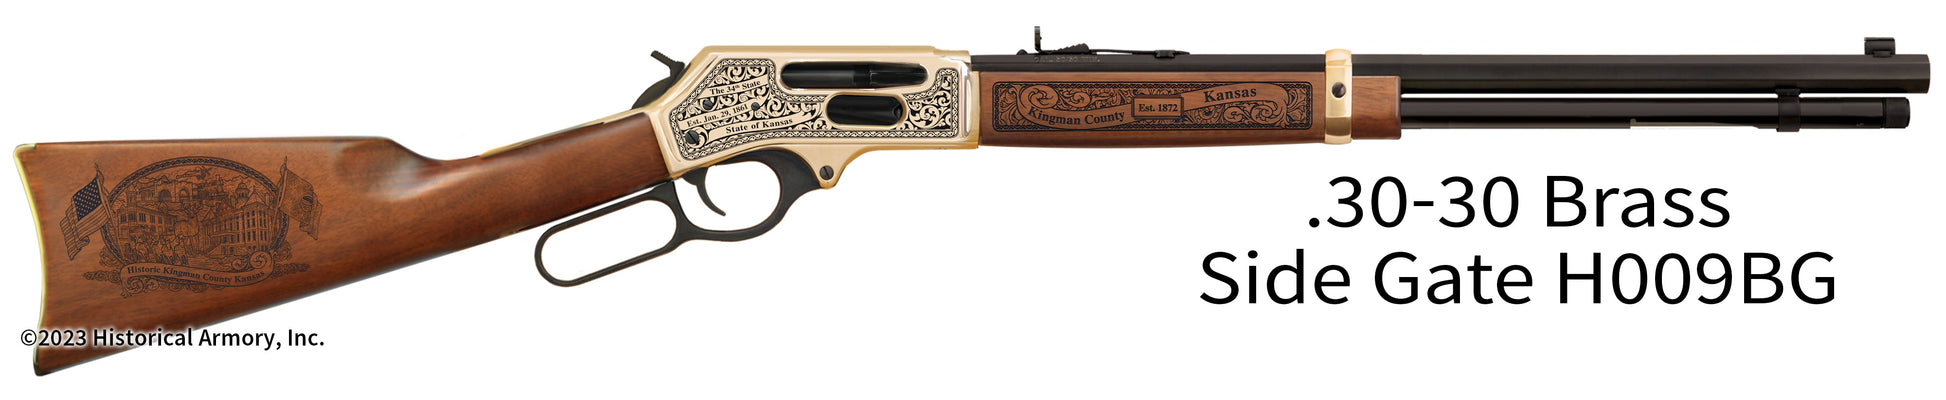 Kingman County Kansas Engraved Henry .30-30 Brass Side Gate Rifle